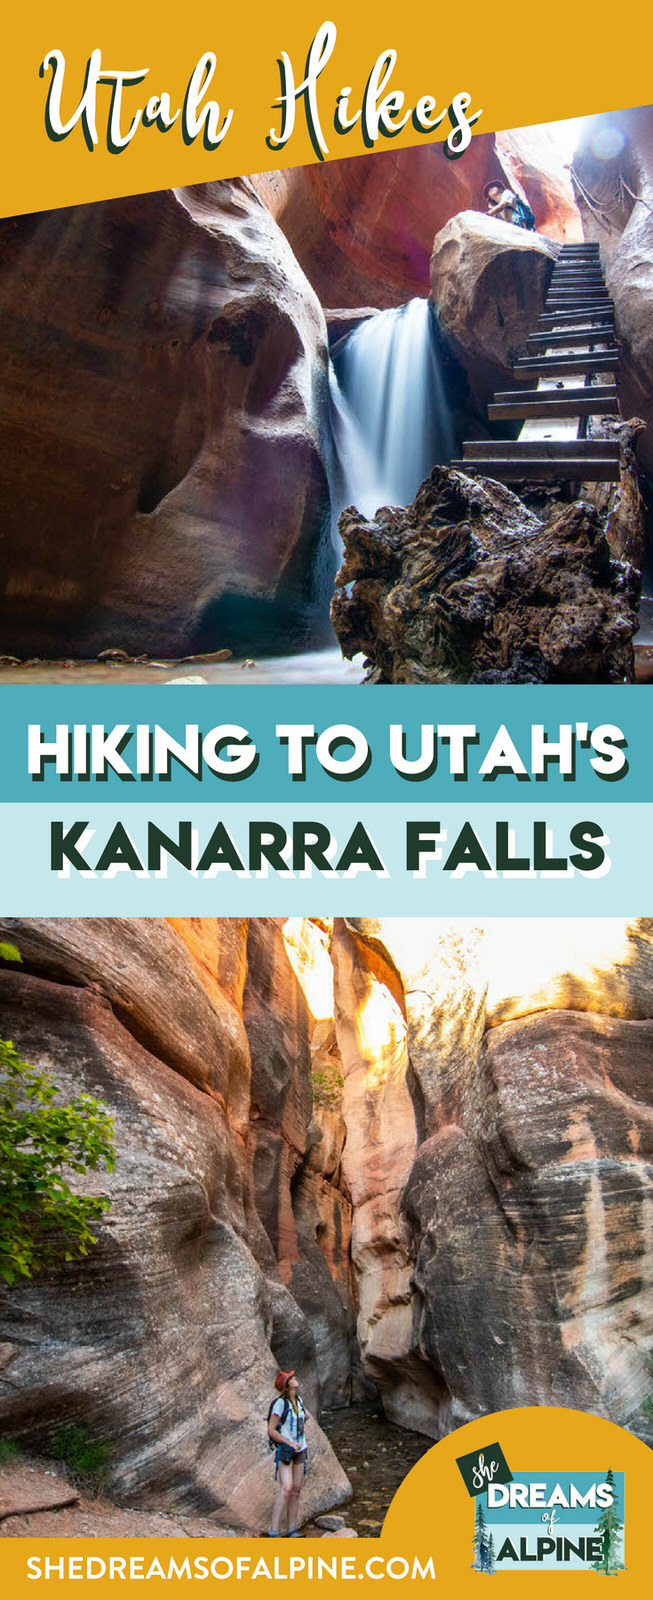 Hiking Kanarra Falls in Utah Near Zion National Park